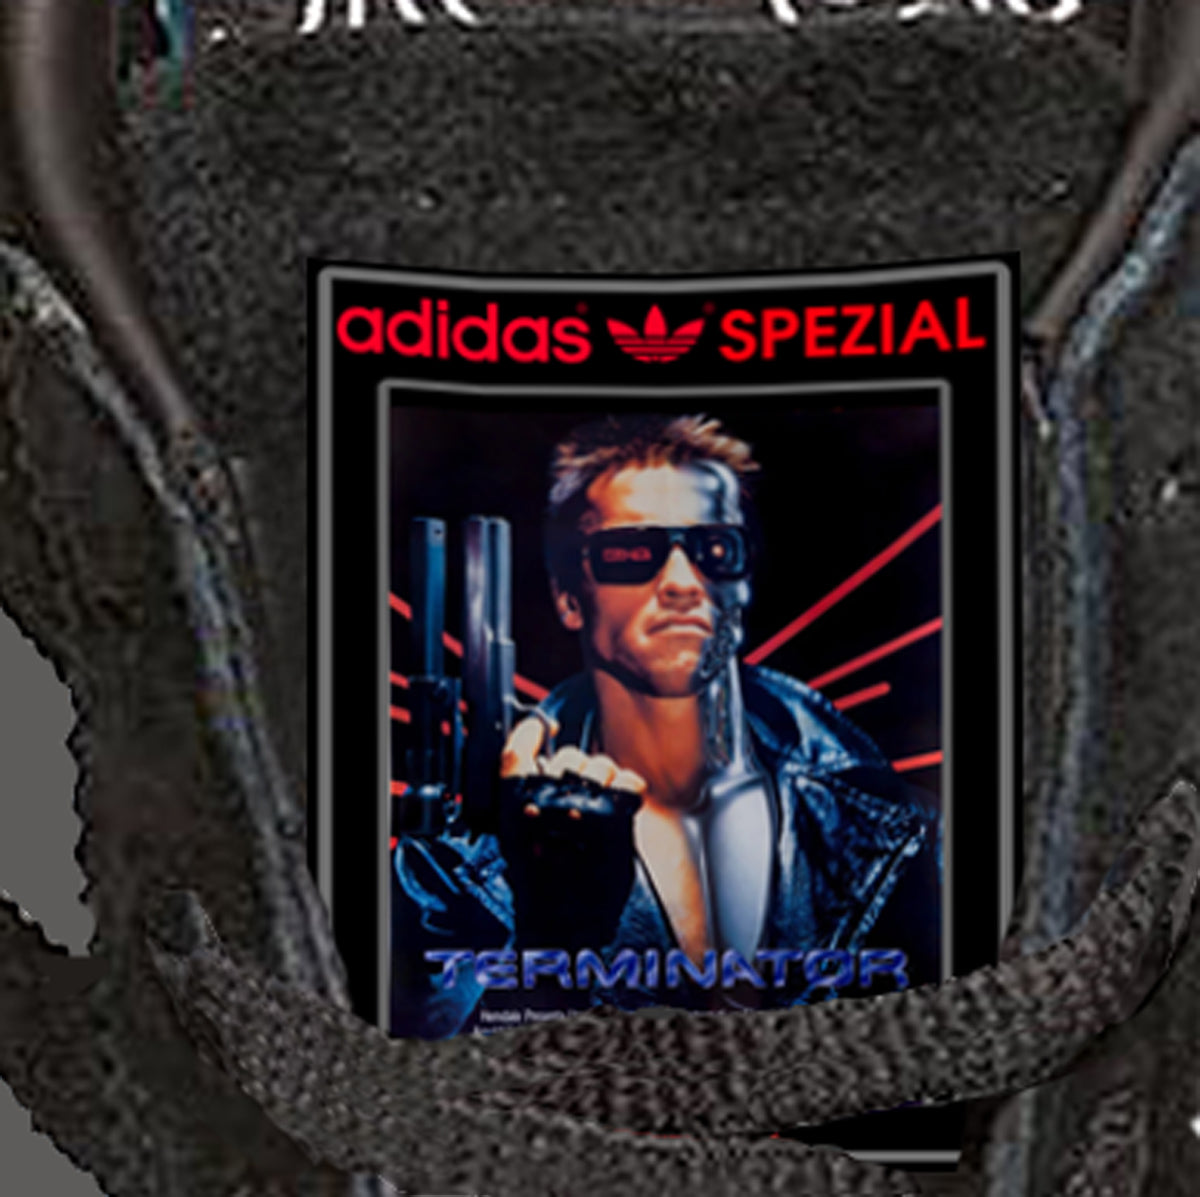 Limited edition The Terminator movie black / grey Adidas custom Handball Spezial trainers / sneakers